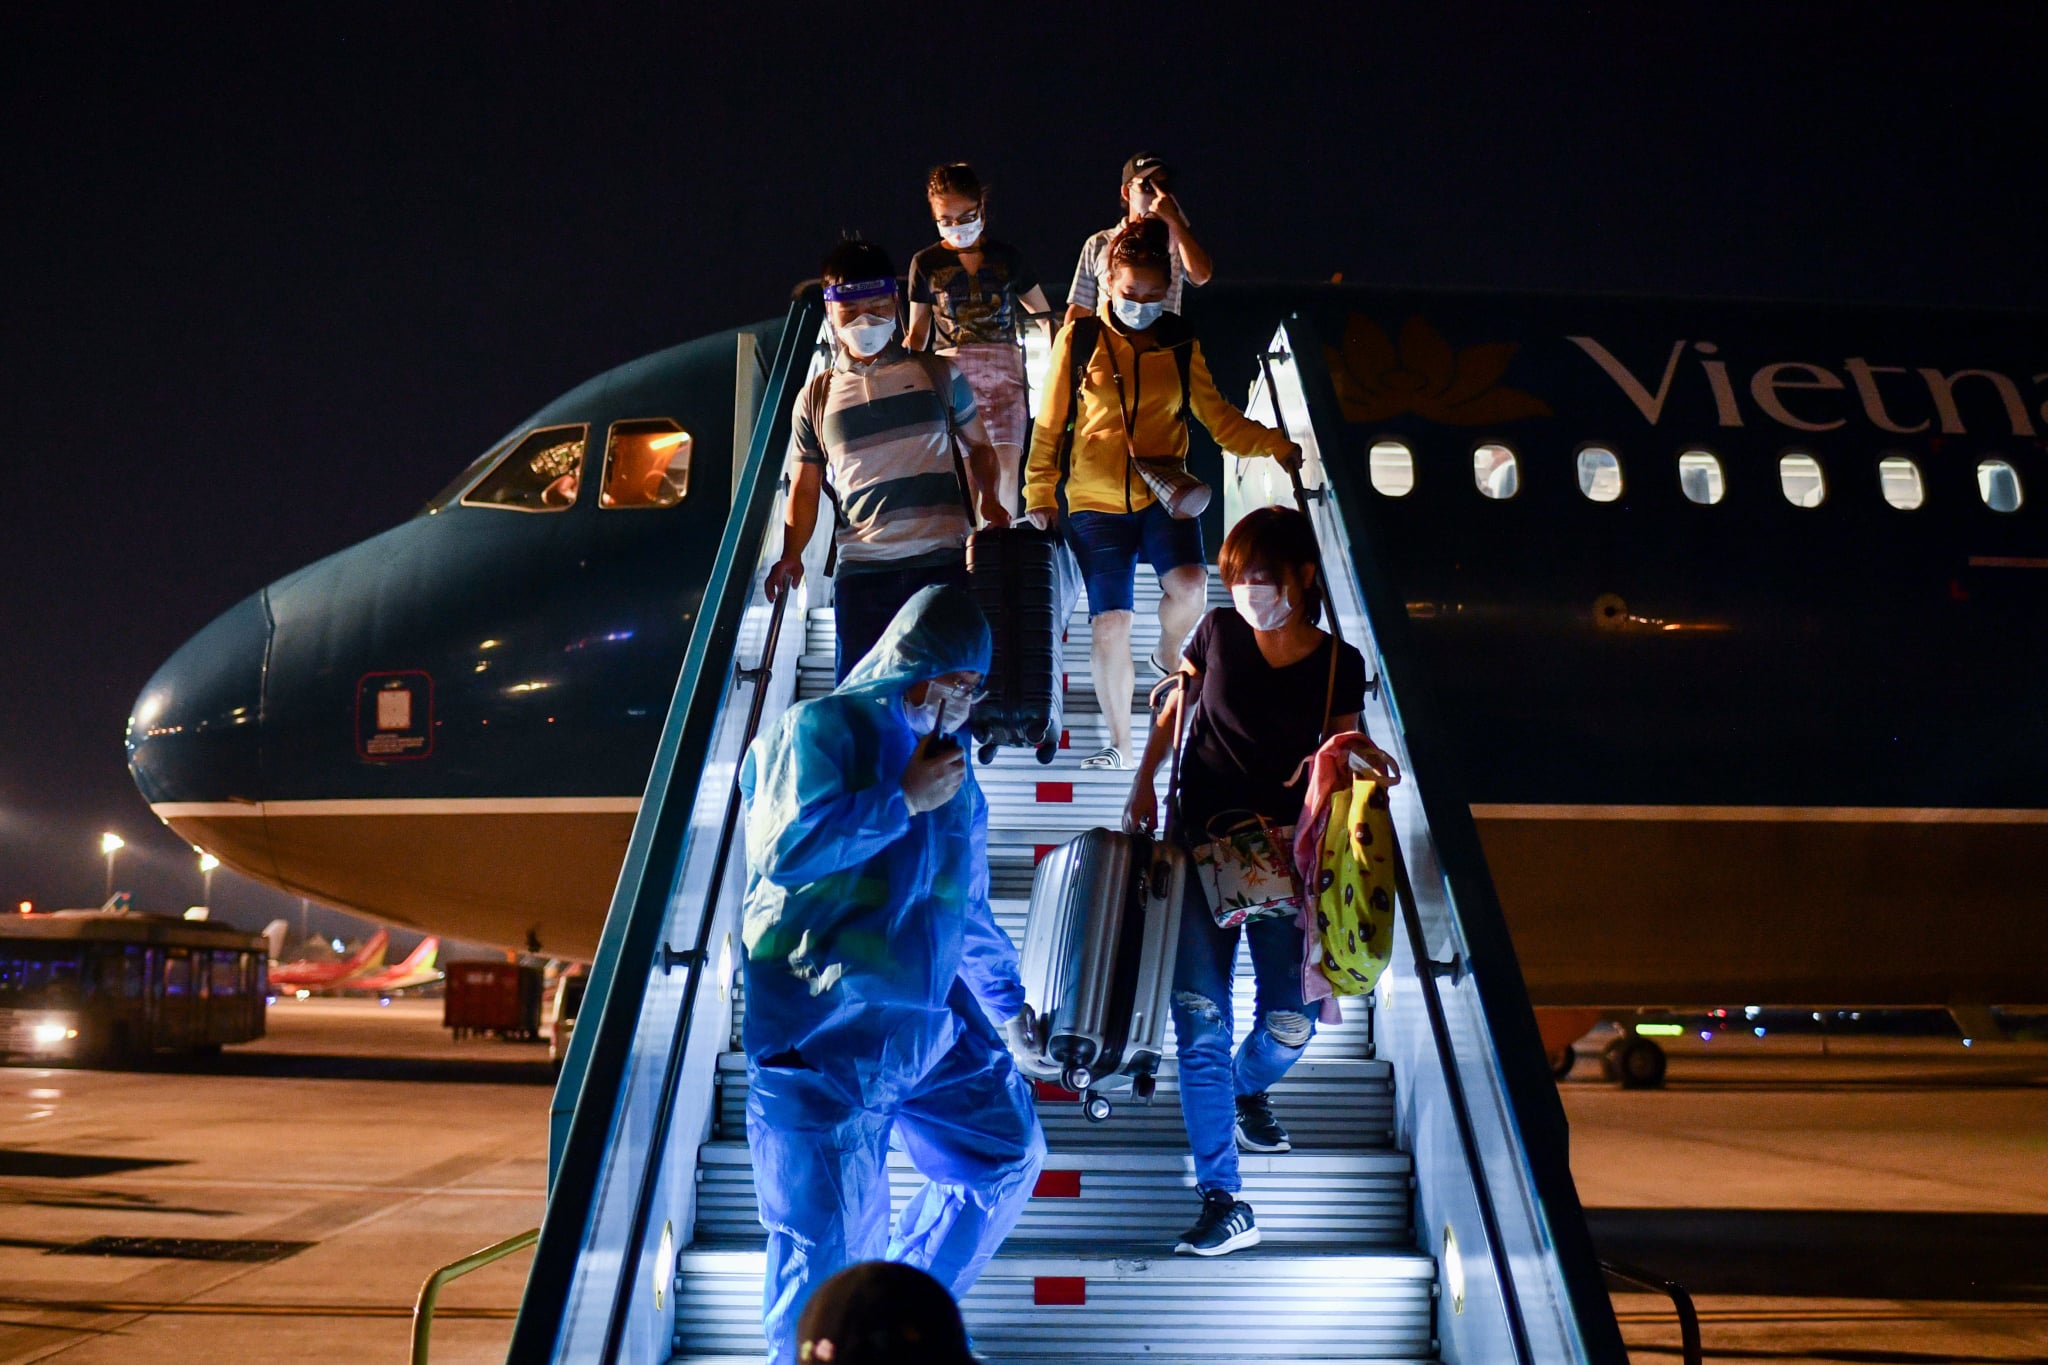 flights to Vietnam - passengers disembarking at airport